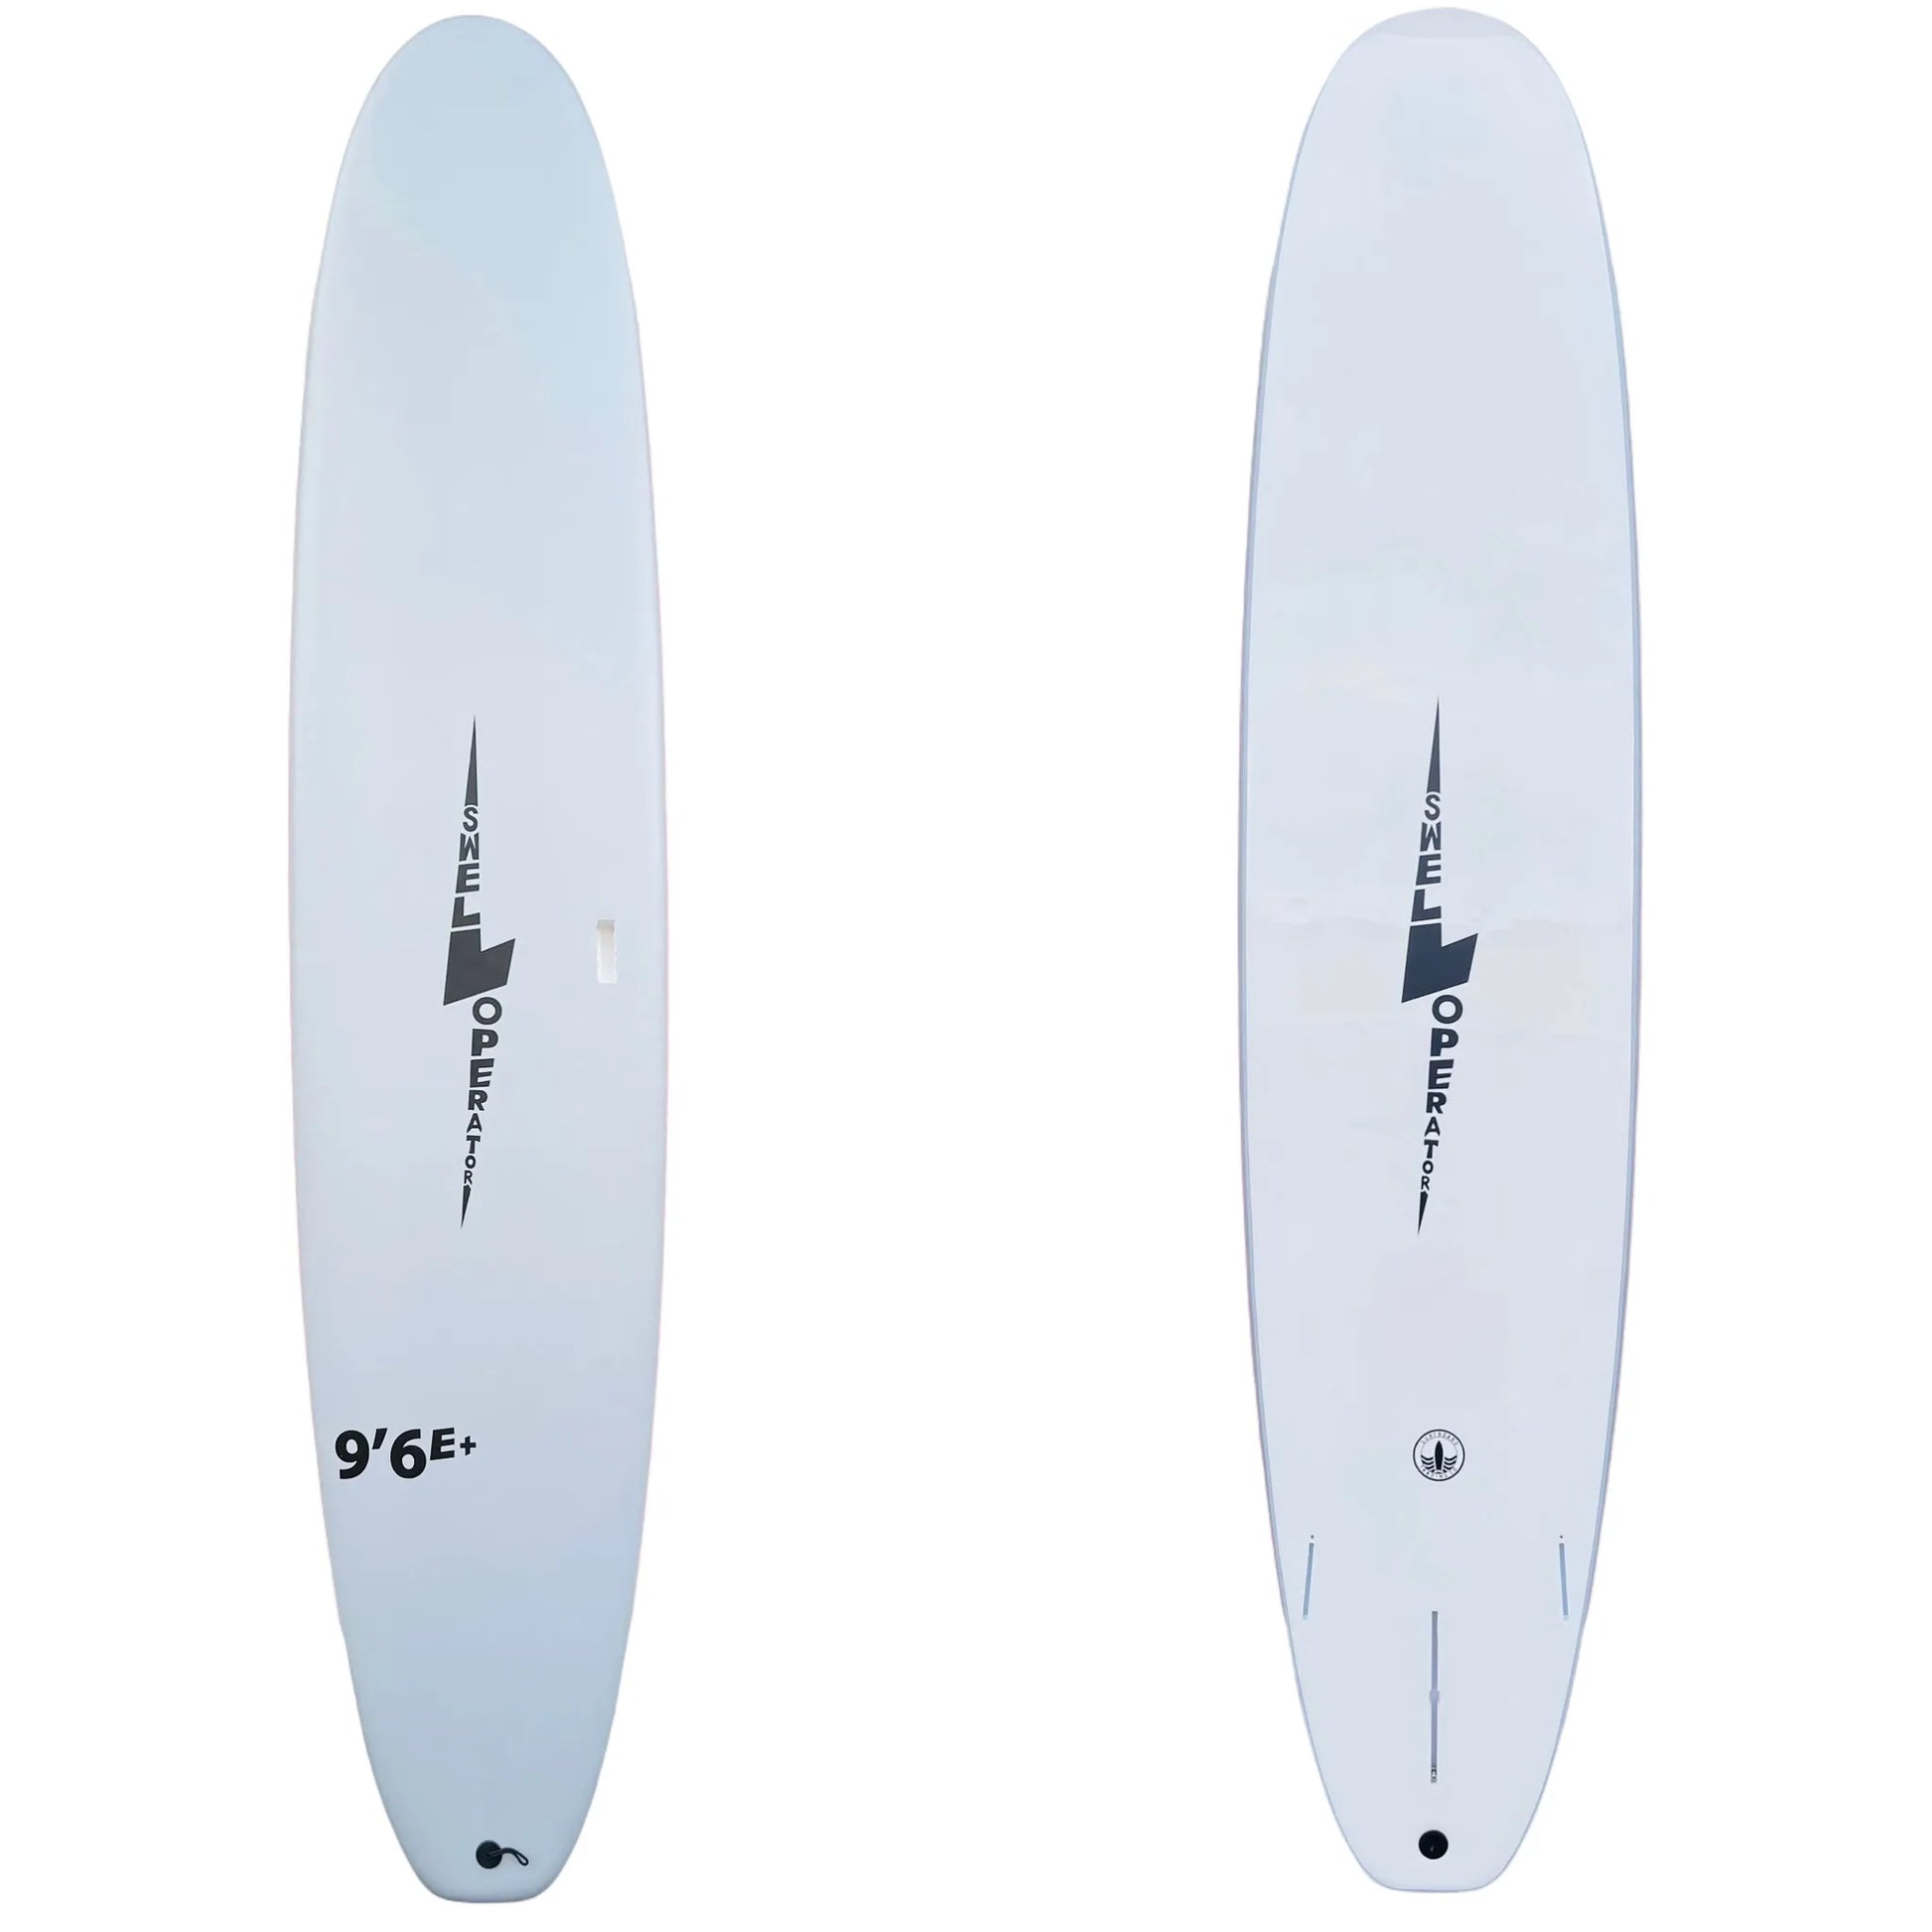 Surfboard Trading Company Swell Operator Soft Surfboards Softboard 9'6 Epoxy Core Softboard